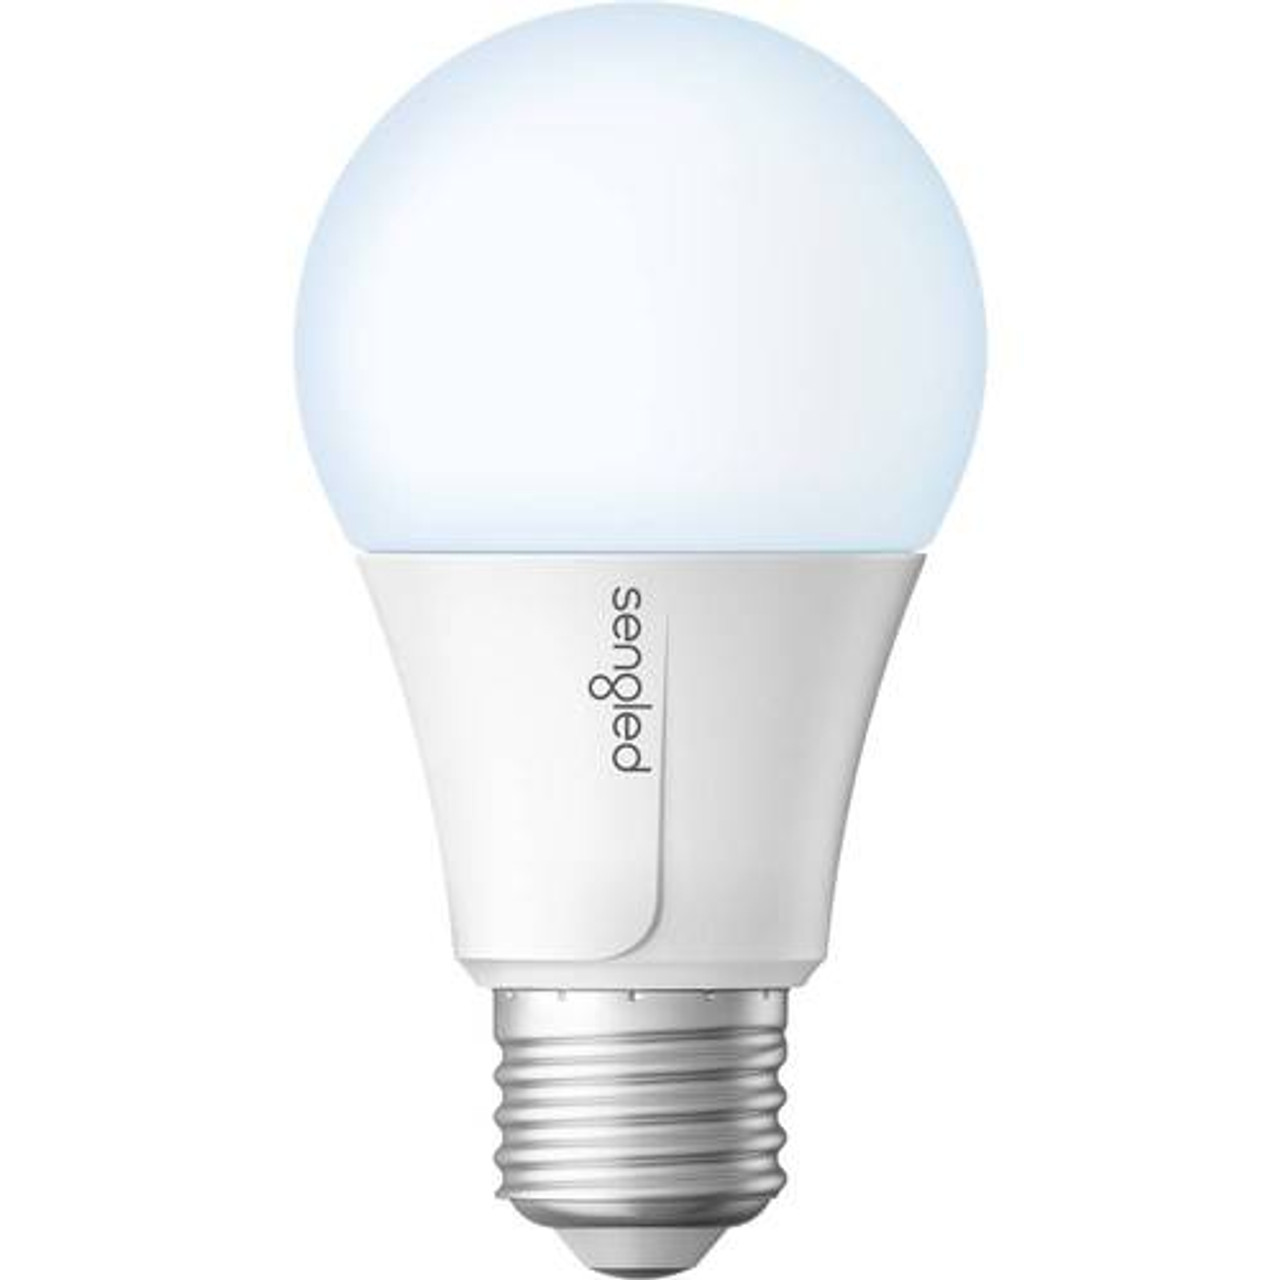 Sengled - A19 Wi-Fi Smart LED Bulb - Daylight